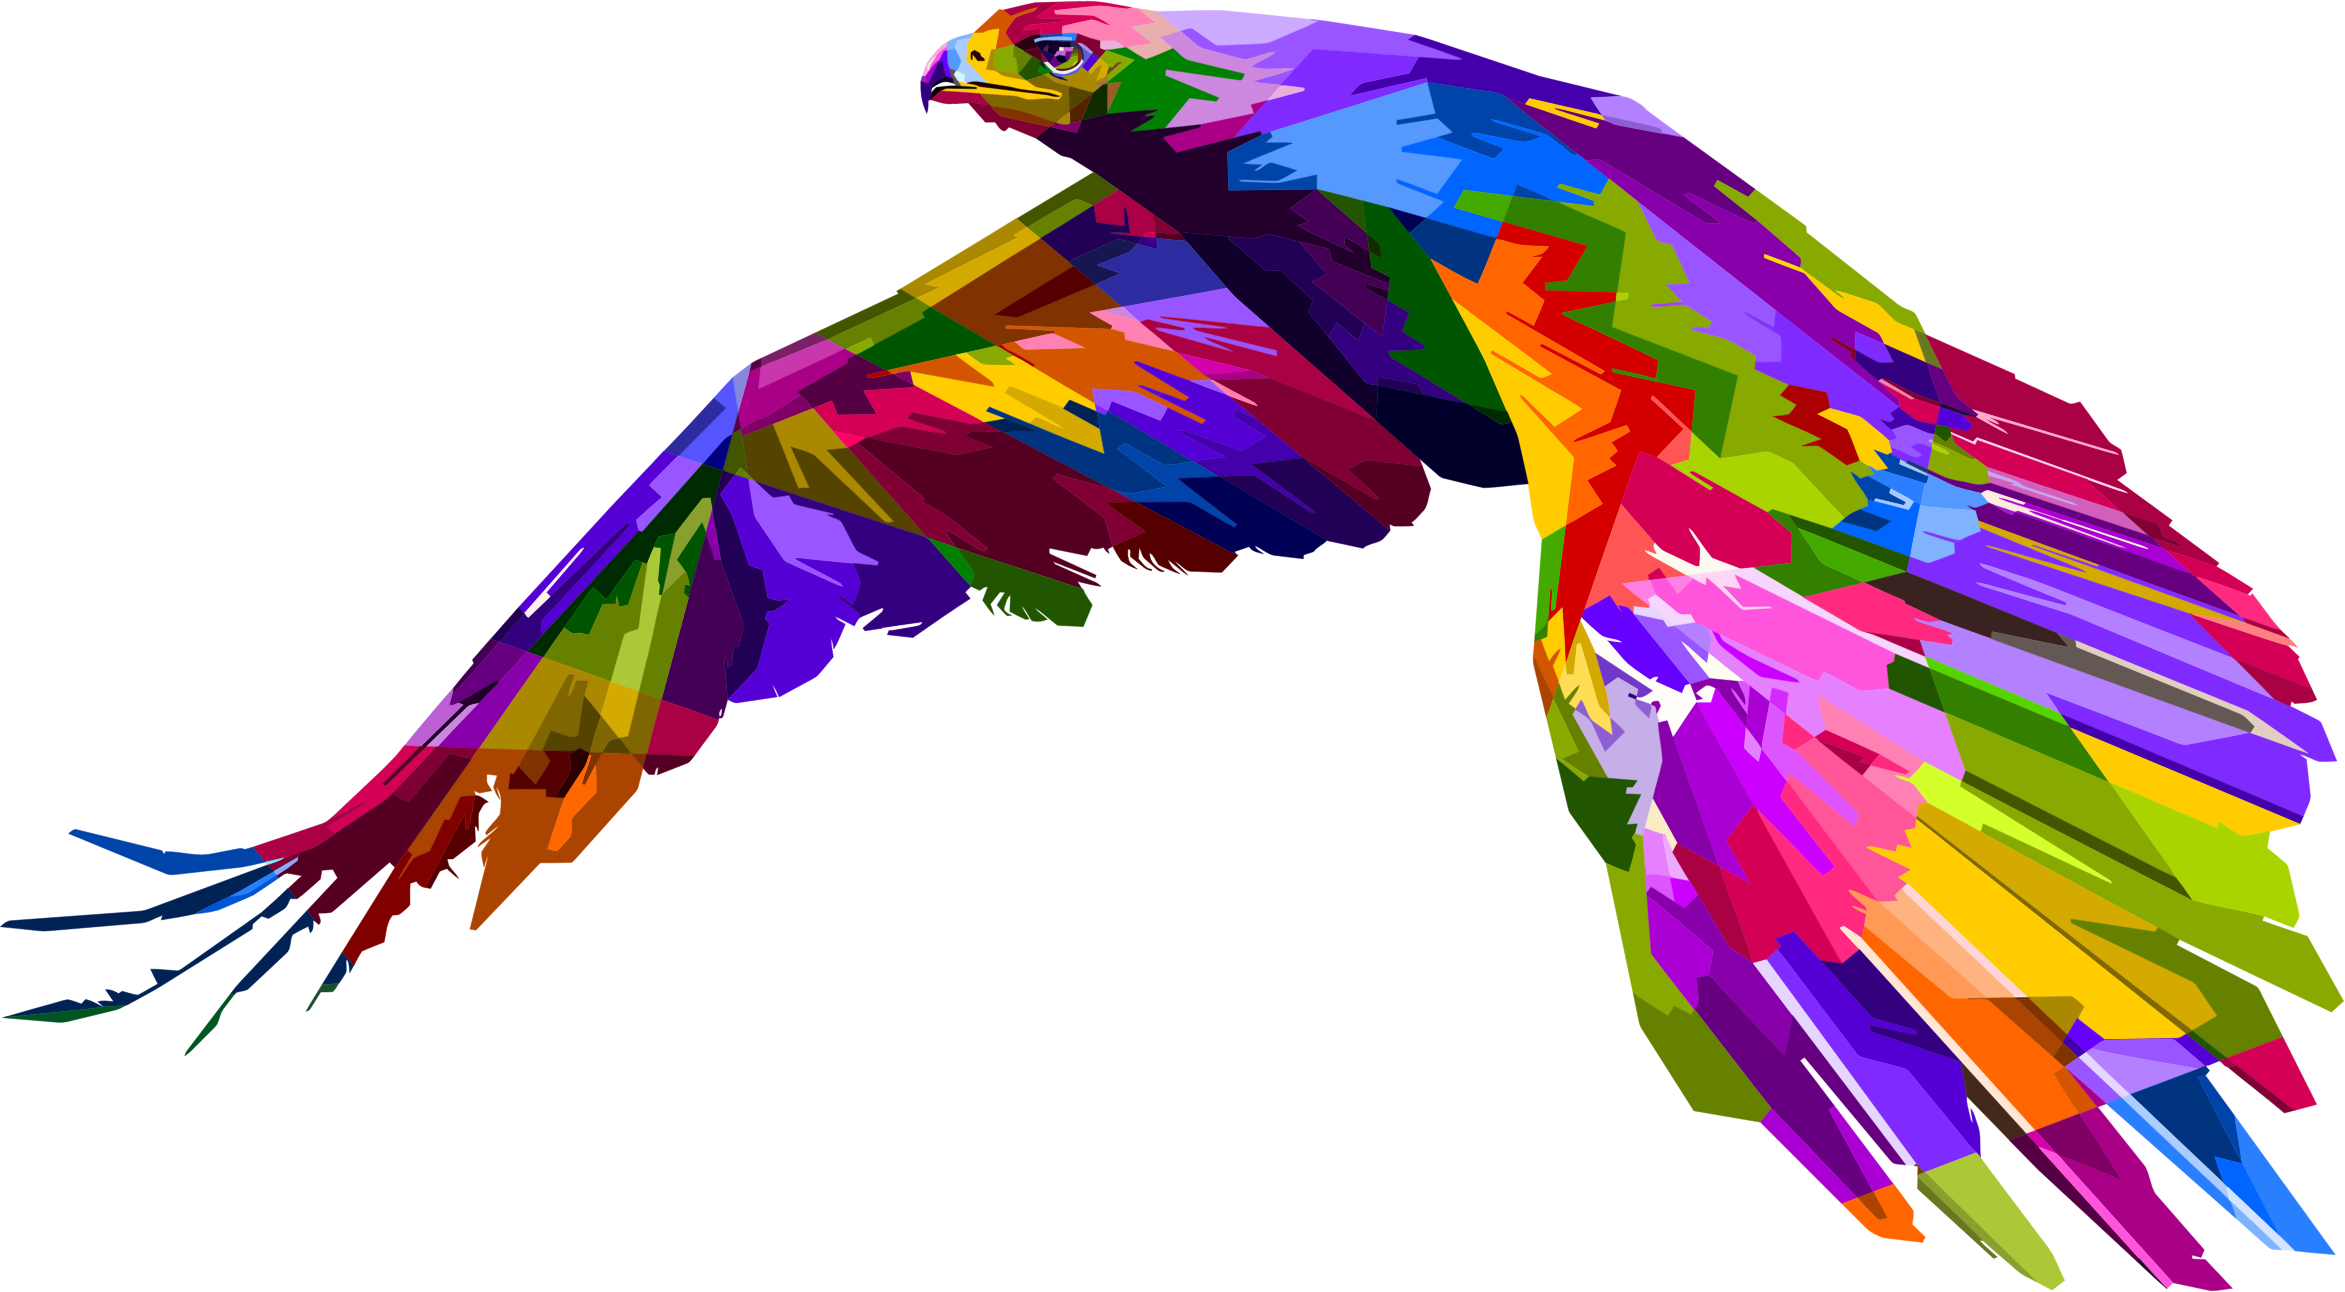 Big Image - Aguia Colorido Quadro (2345x1292)